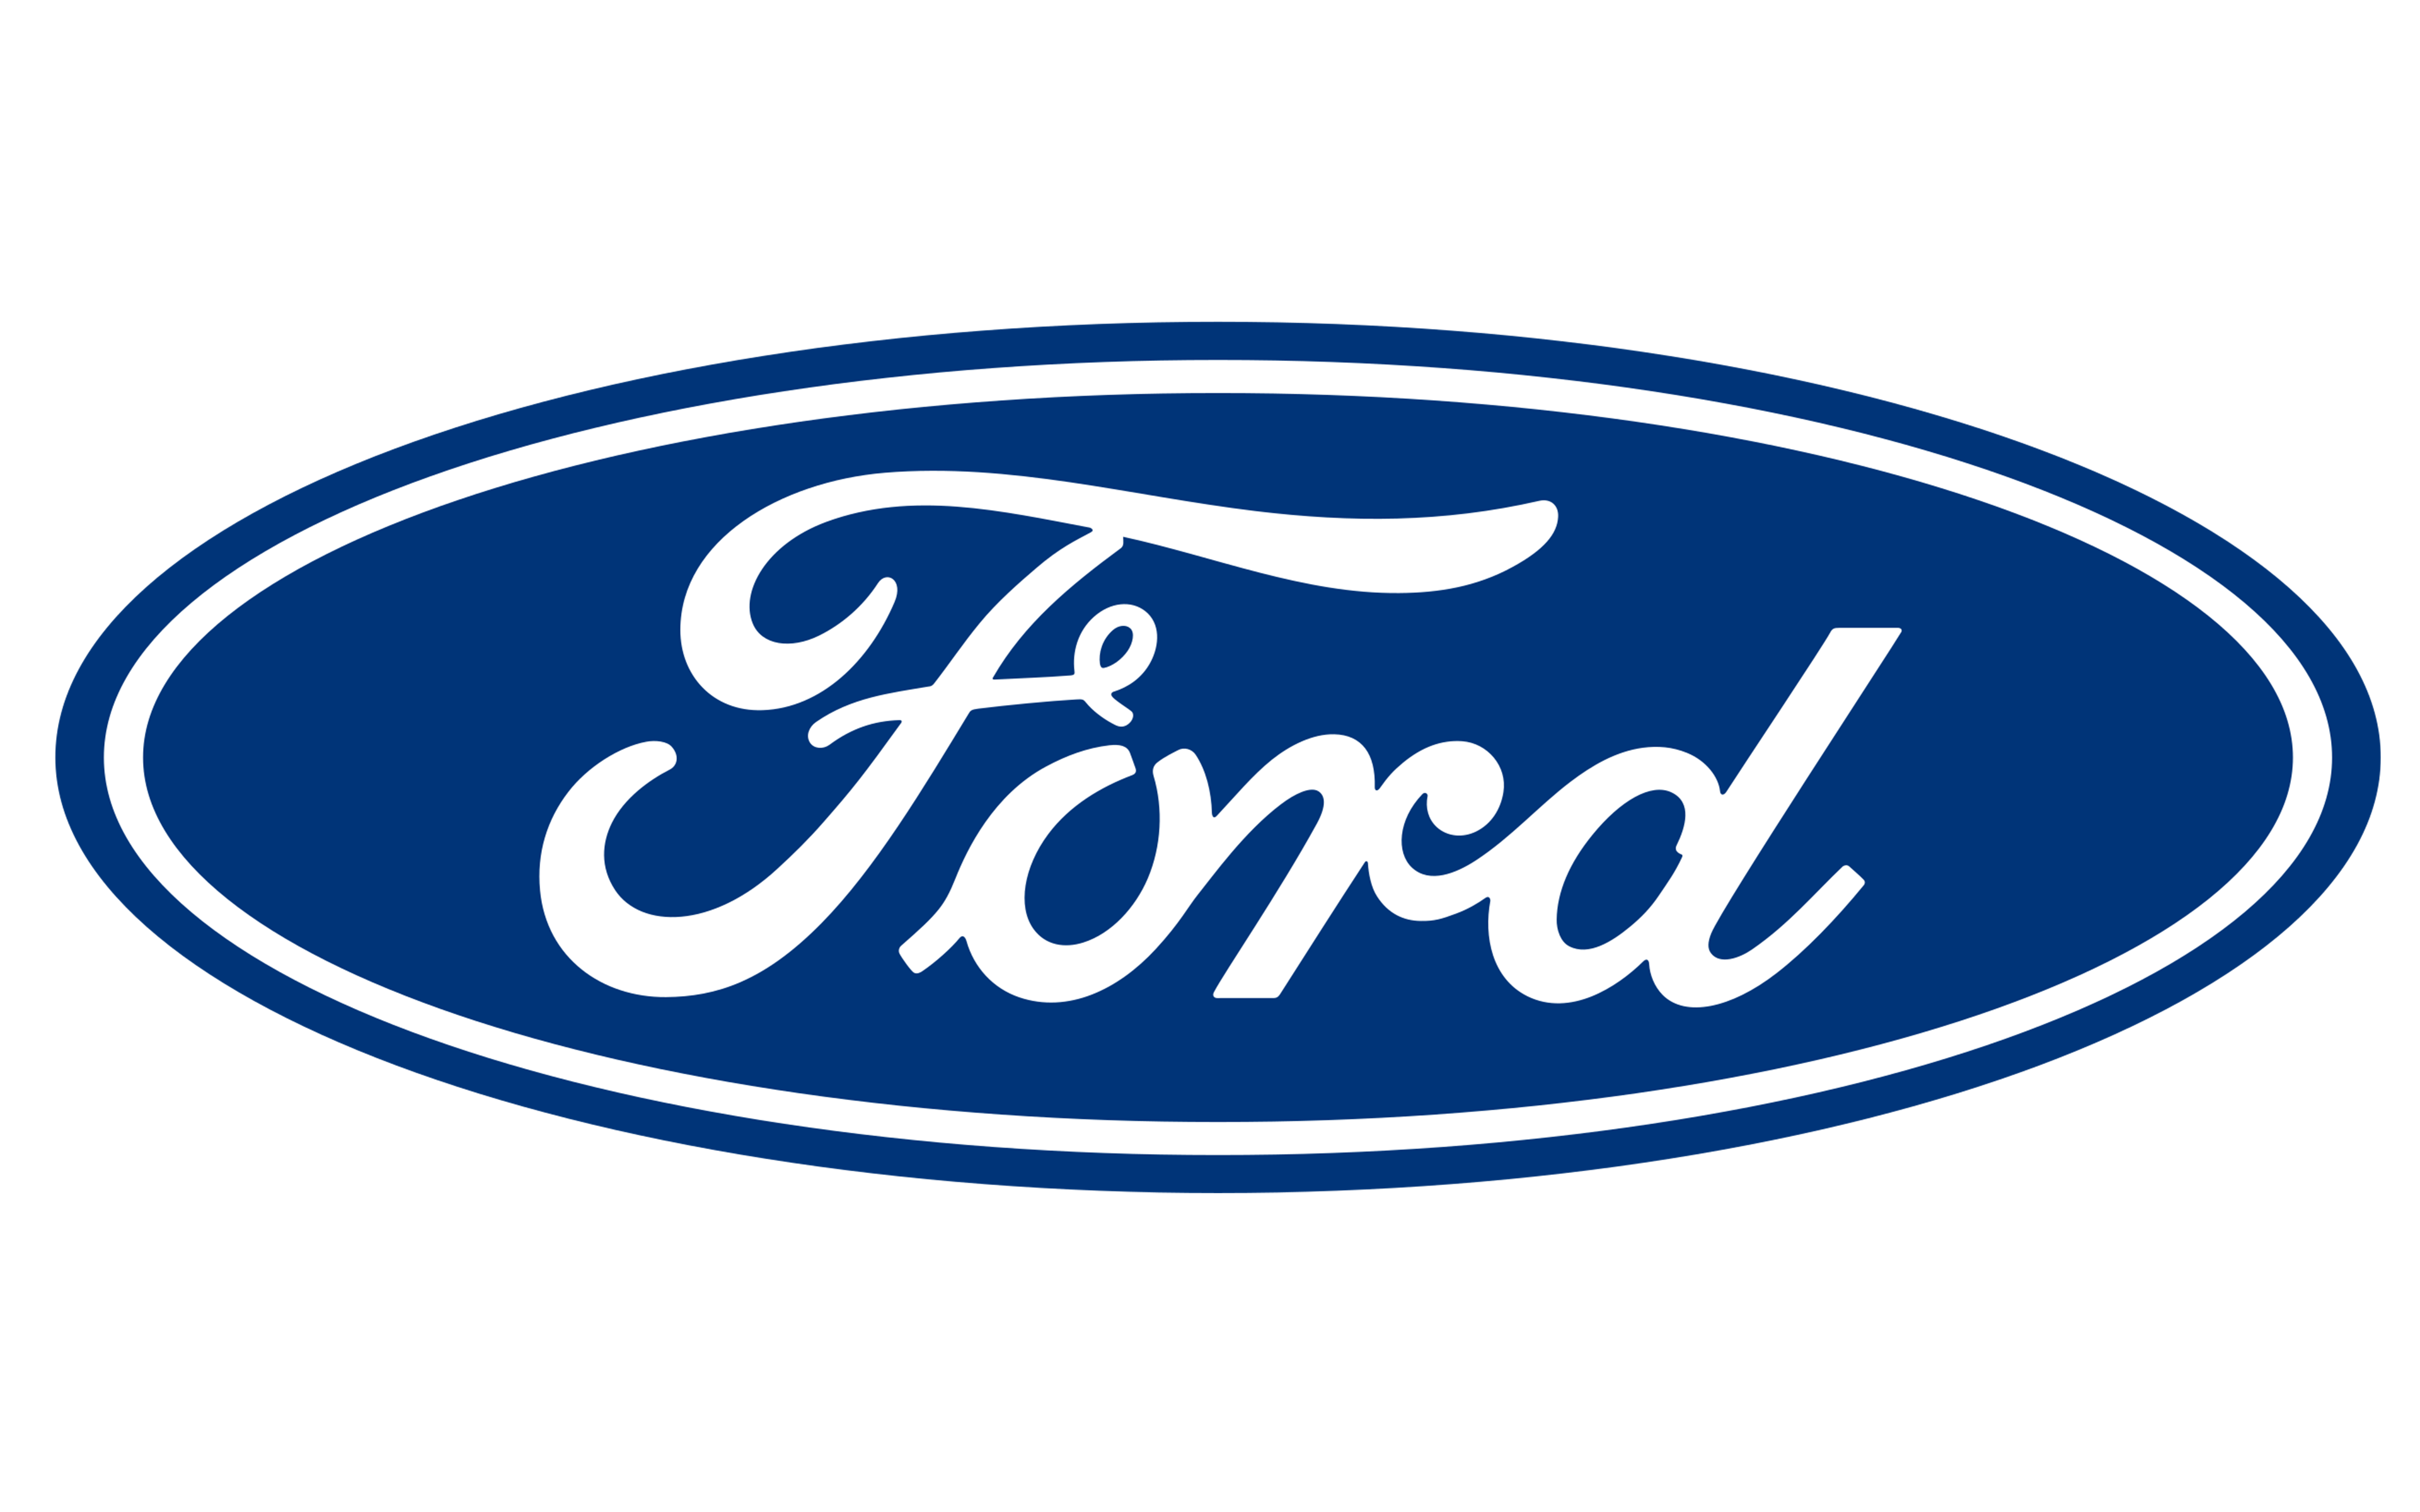 Logo-ford